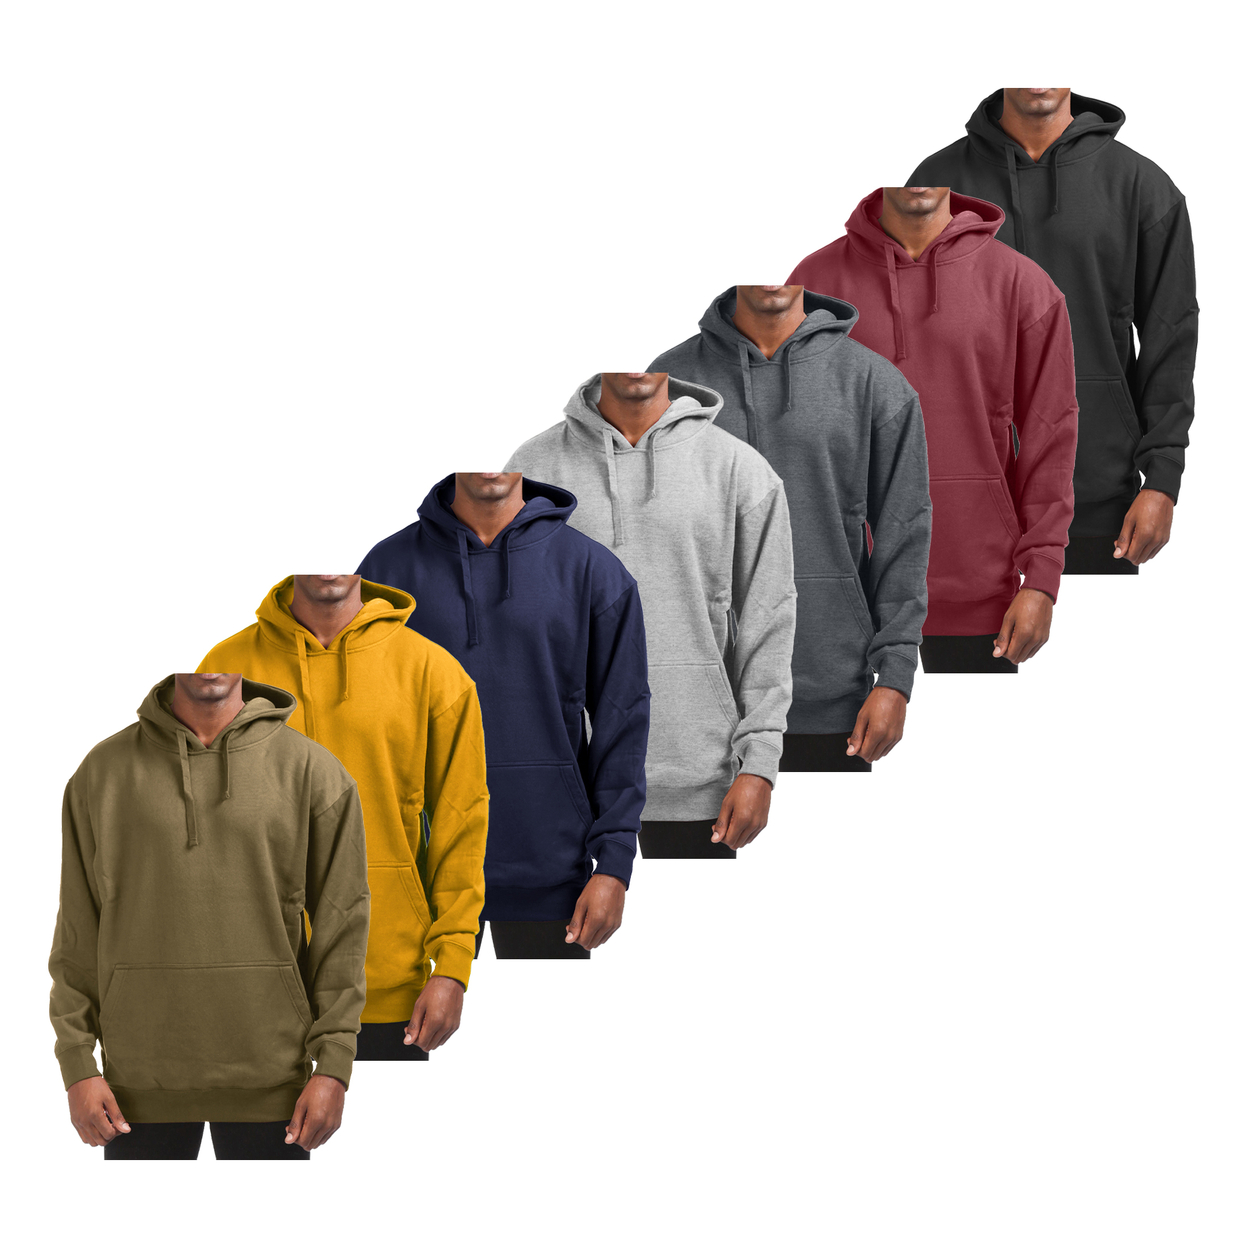 2-Pack: Men's Super-Soft Winter Warm Cotton-Blend Fleece Pullover Hoodie With Kangaroo Pocket - Black & Navy, 3x-large